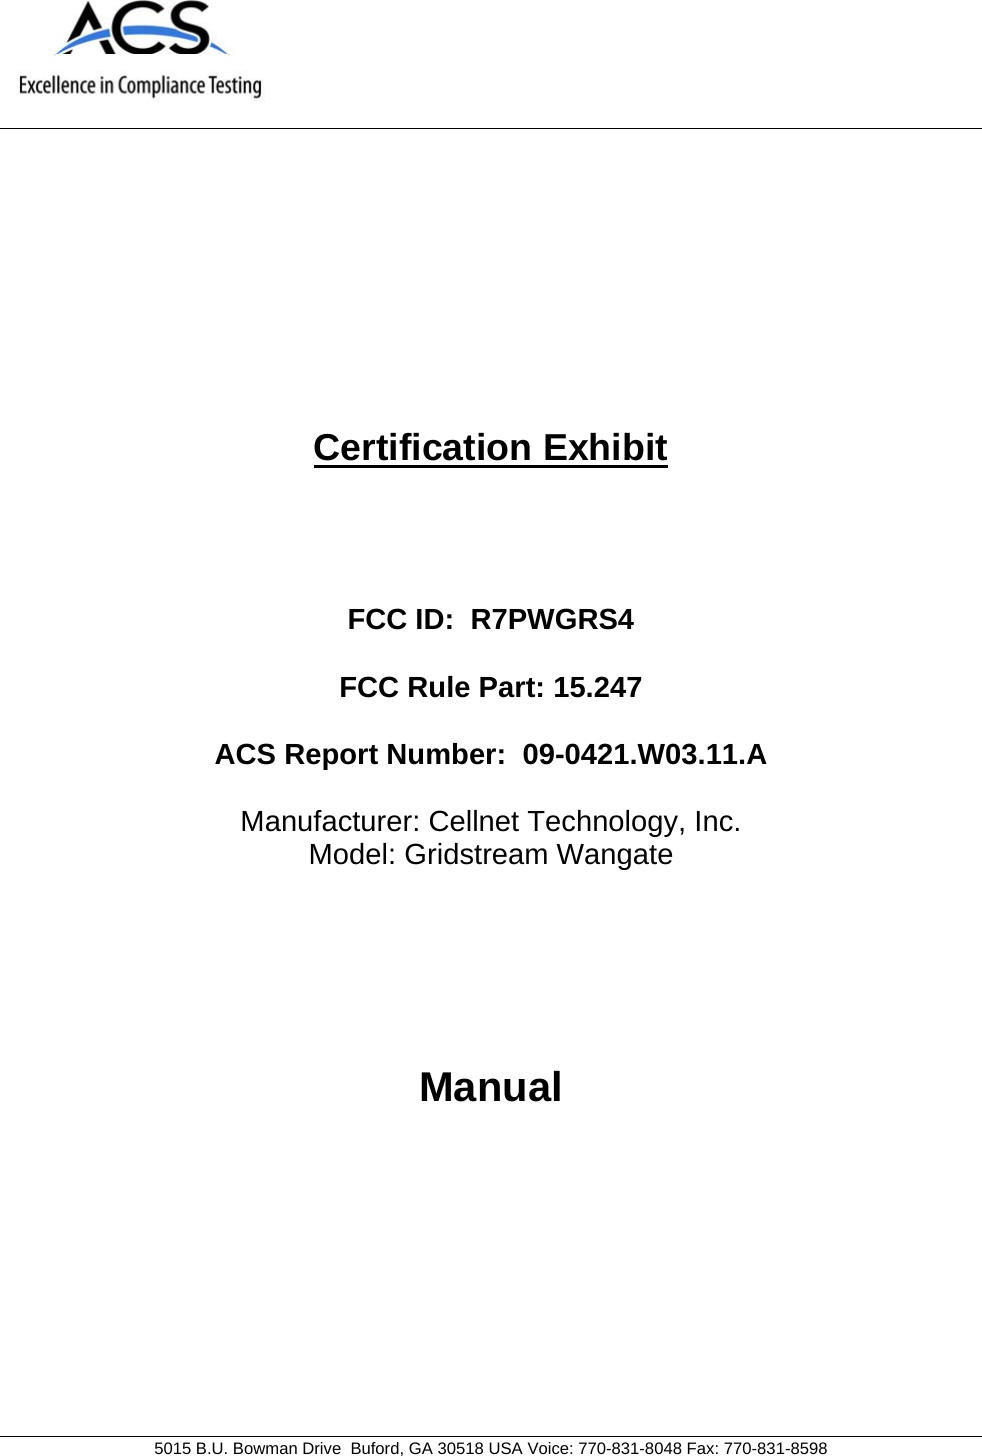     5015 B.U. Bowman Drive  Buford, GA 30518 USA Voice: 770-831-8048 Fax: 770-831-8598   Certification Exhibit     FCC ID:  R7PWGRS4  FCC Rule Part: 15.247  ACS Report Number:  09-0421.W03.11.A   Manufacturer: Cellnet Technology, Inc. Model: Gridstream Wangate     Manual  